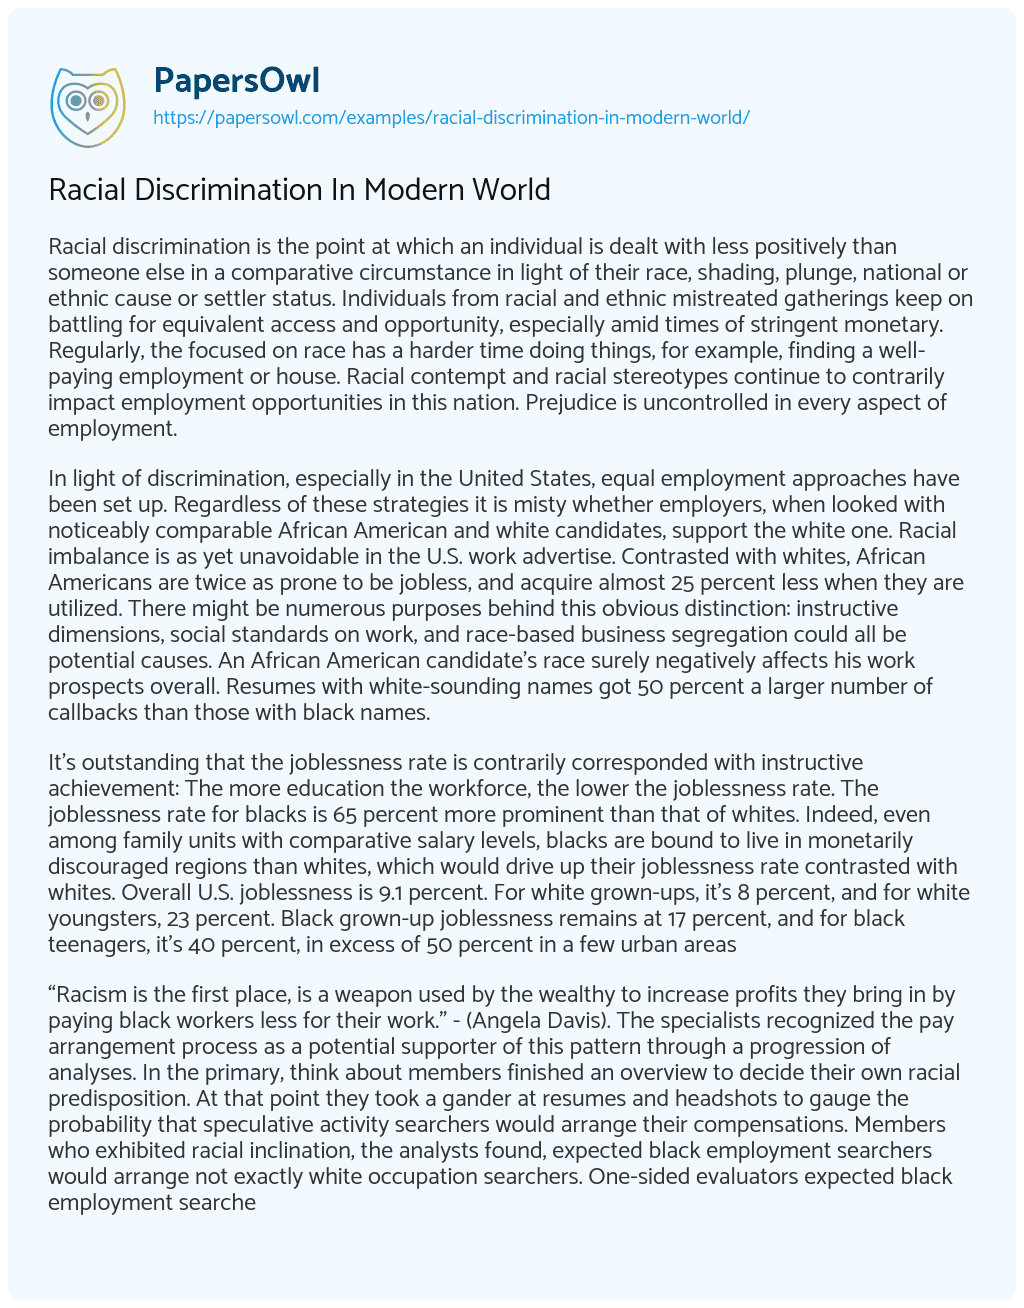 Essay on Racial Discrimination in Modern World